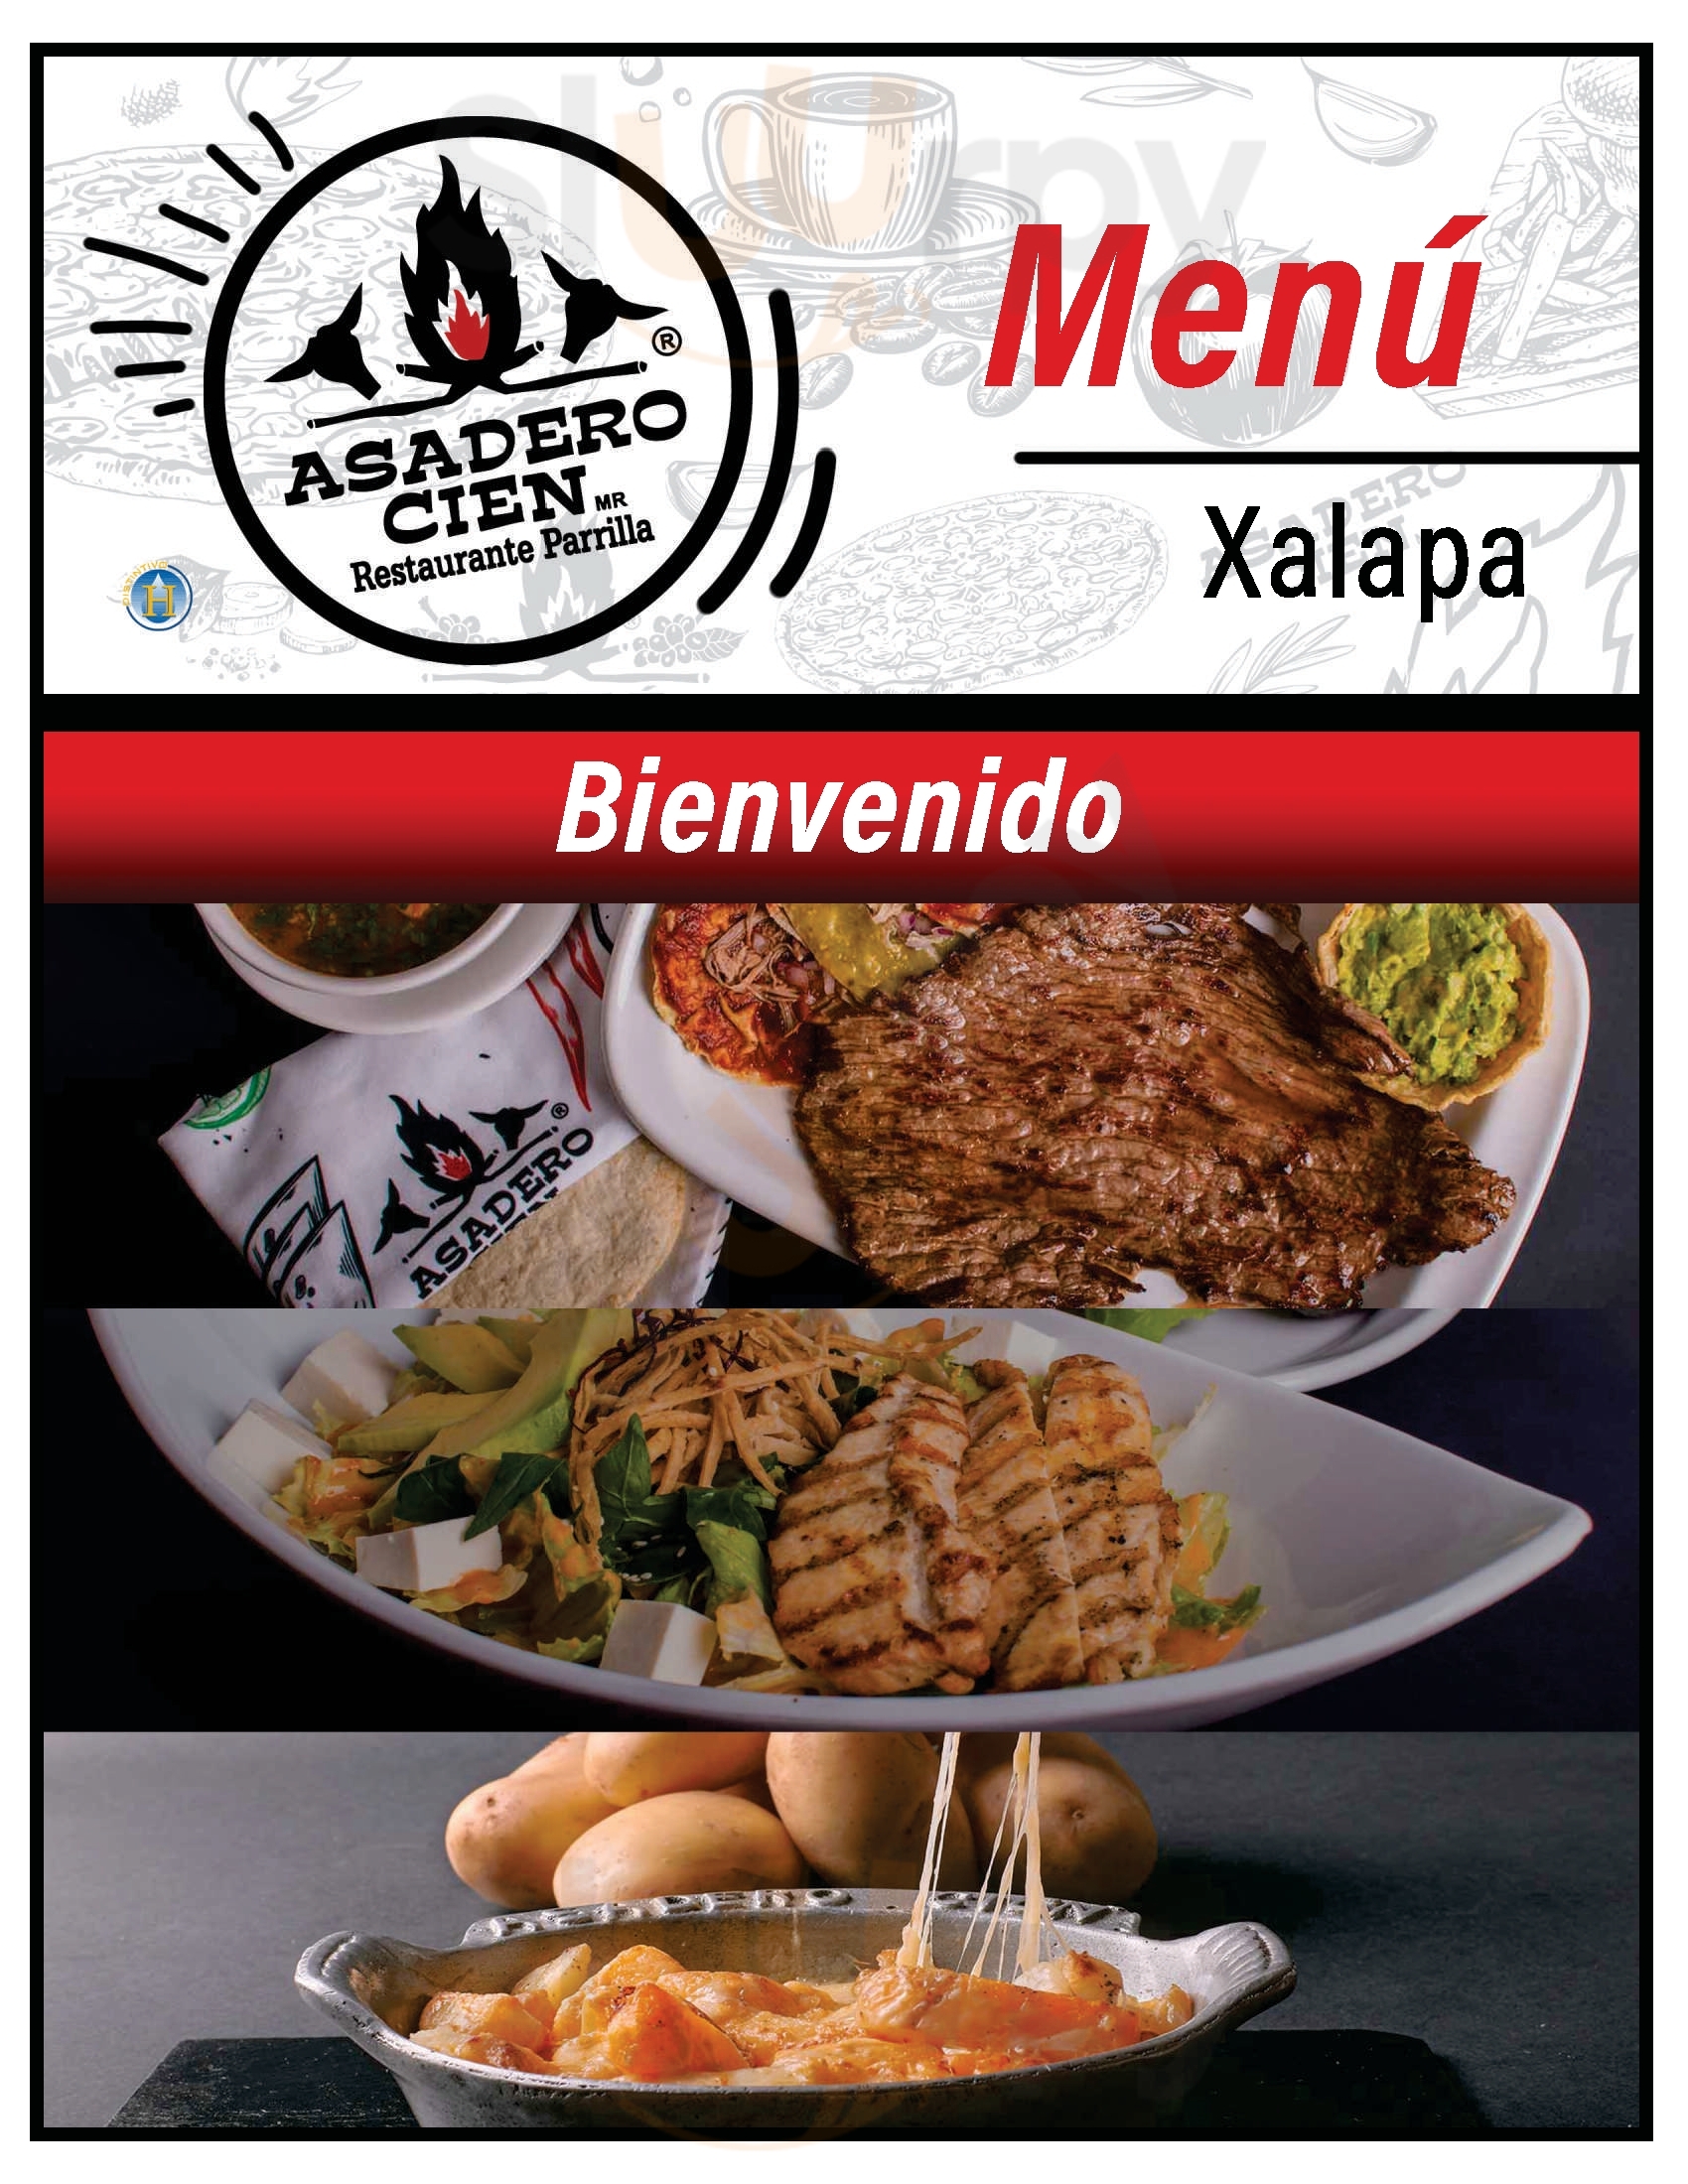 Asadero Cien Restaurante Parrilla Xalapa Menu - 1